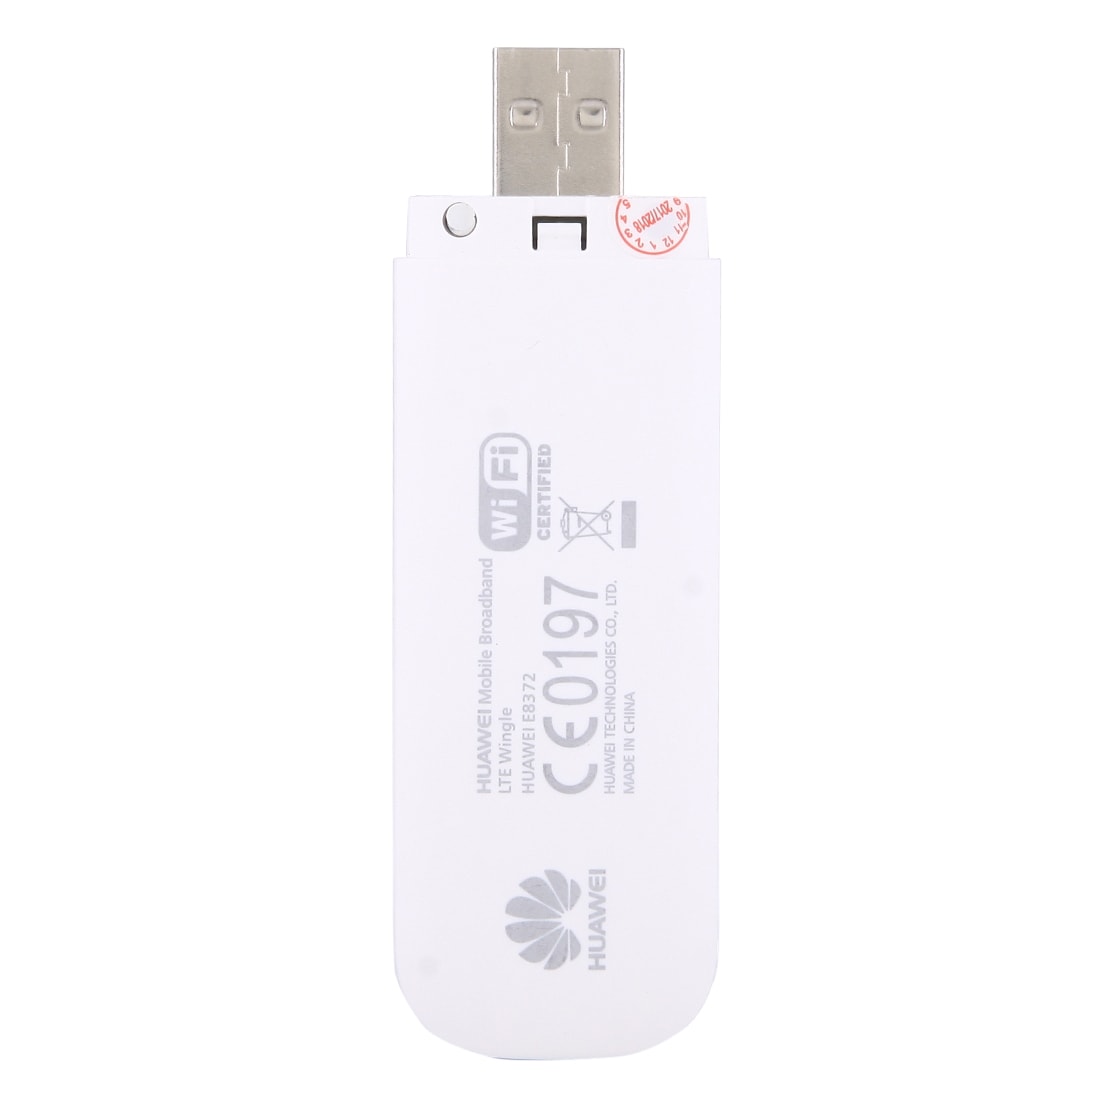 Huawei E8372 4G LTE 150Mbps Wi-Fi USB Modem